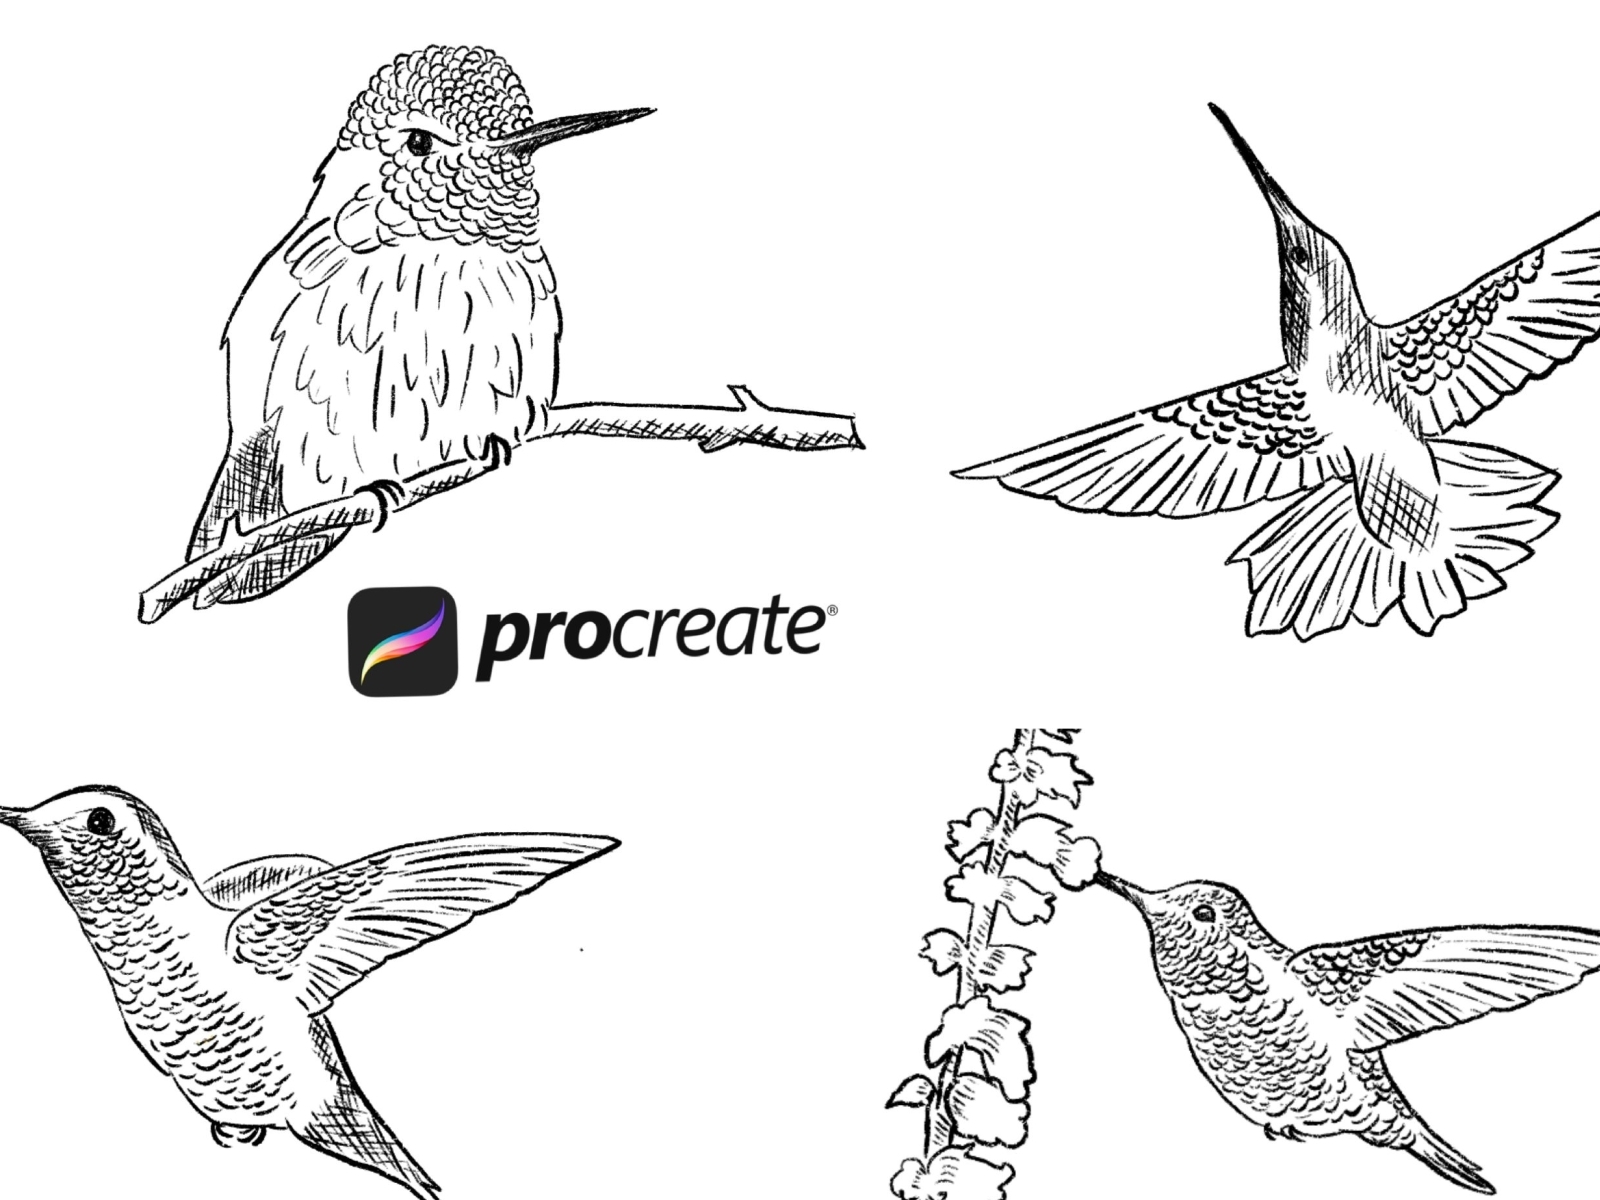 Procreate drawing hummingbird by Arnadi on Dribbble